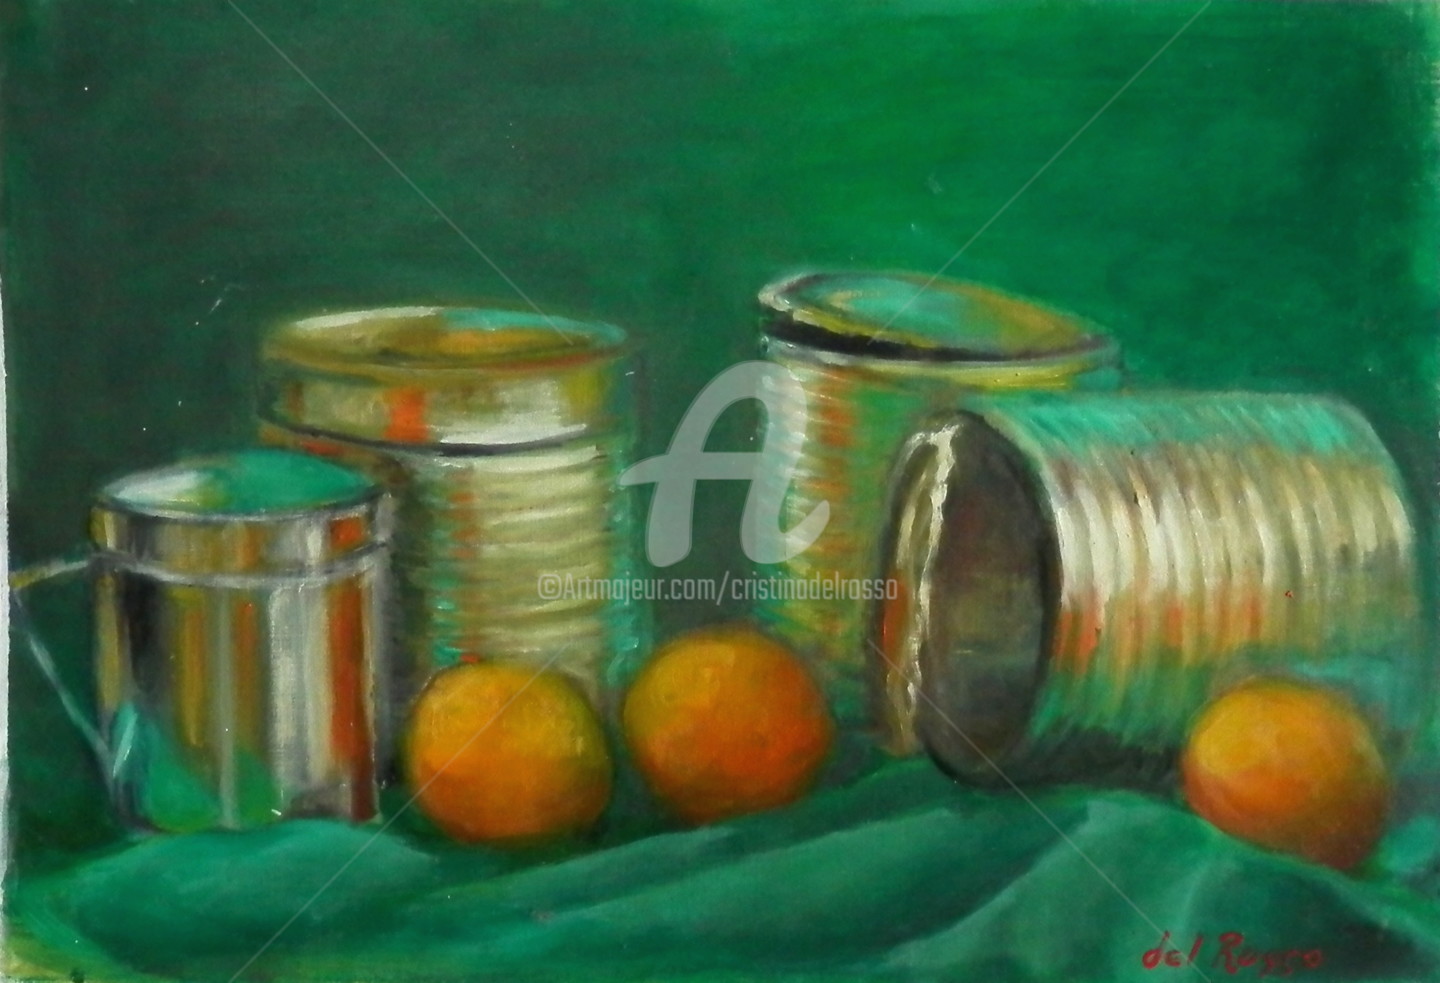 Cristina Del Rosso - Metales y naranjas (Cans and oranges)